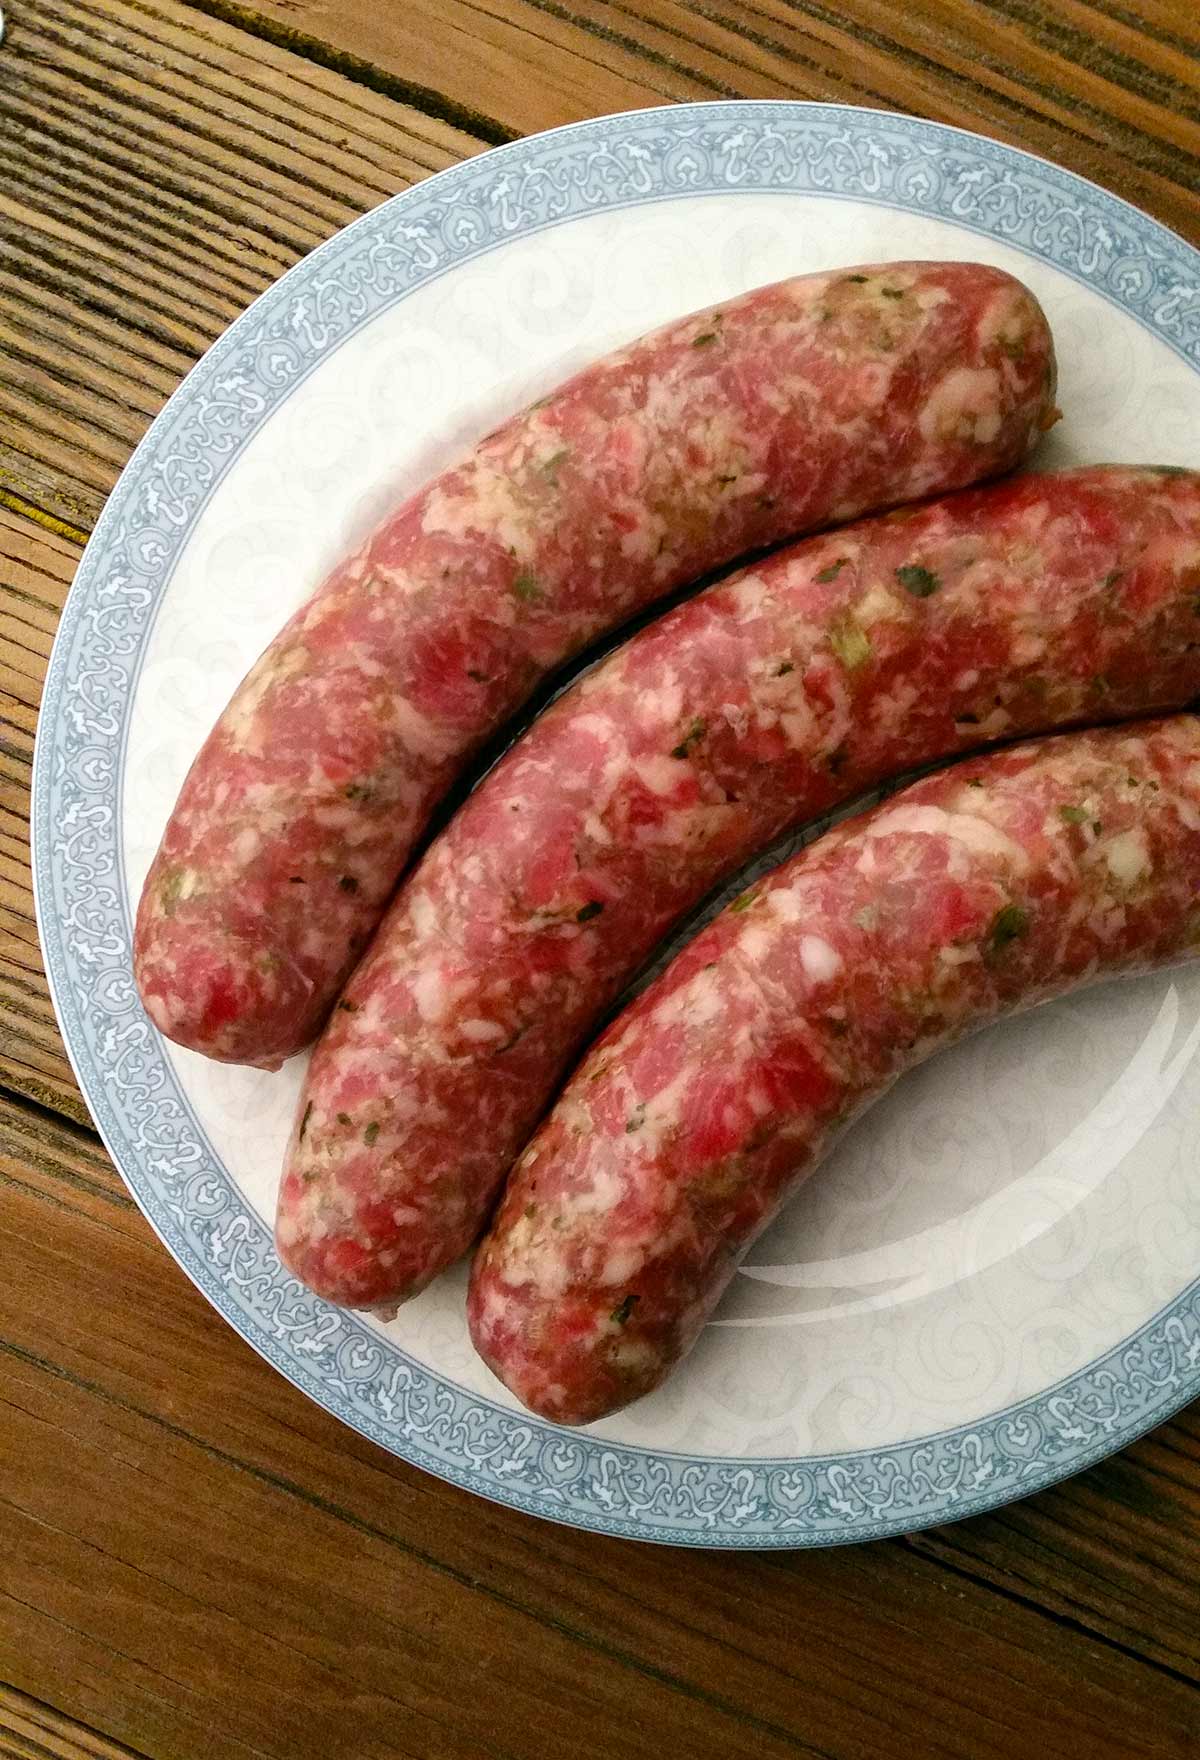 Three links of Hmong sausage on a plate. 